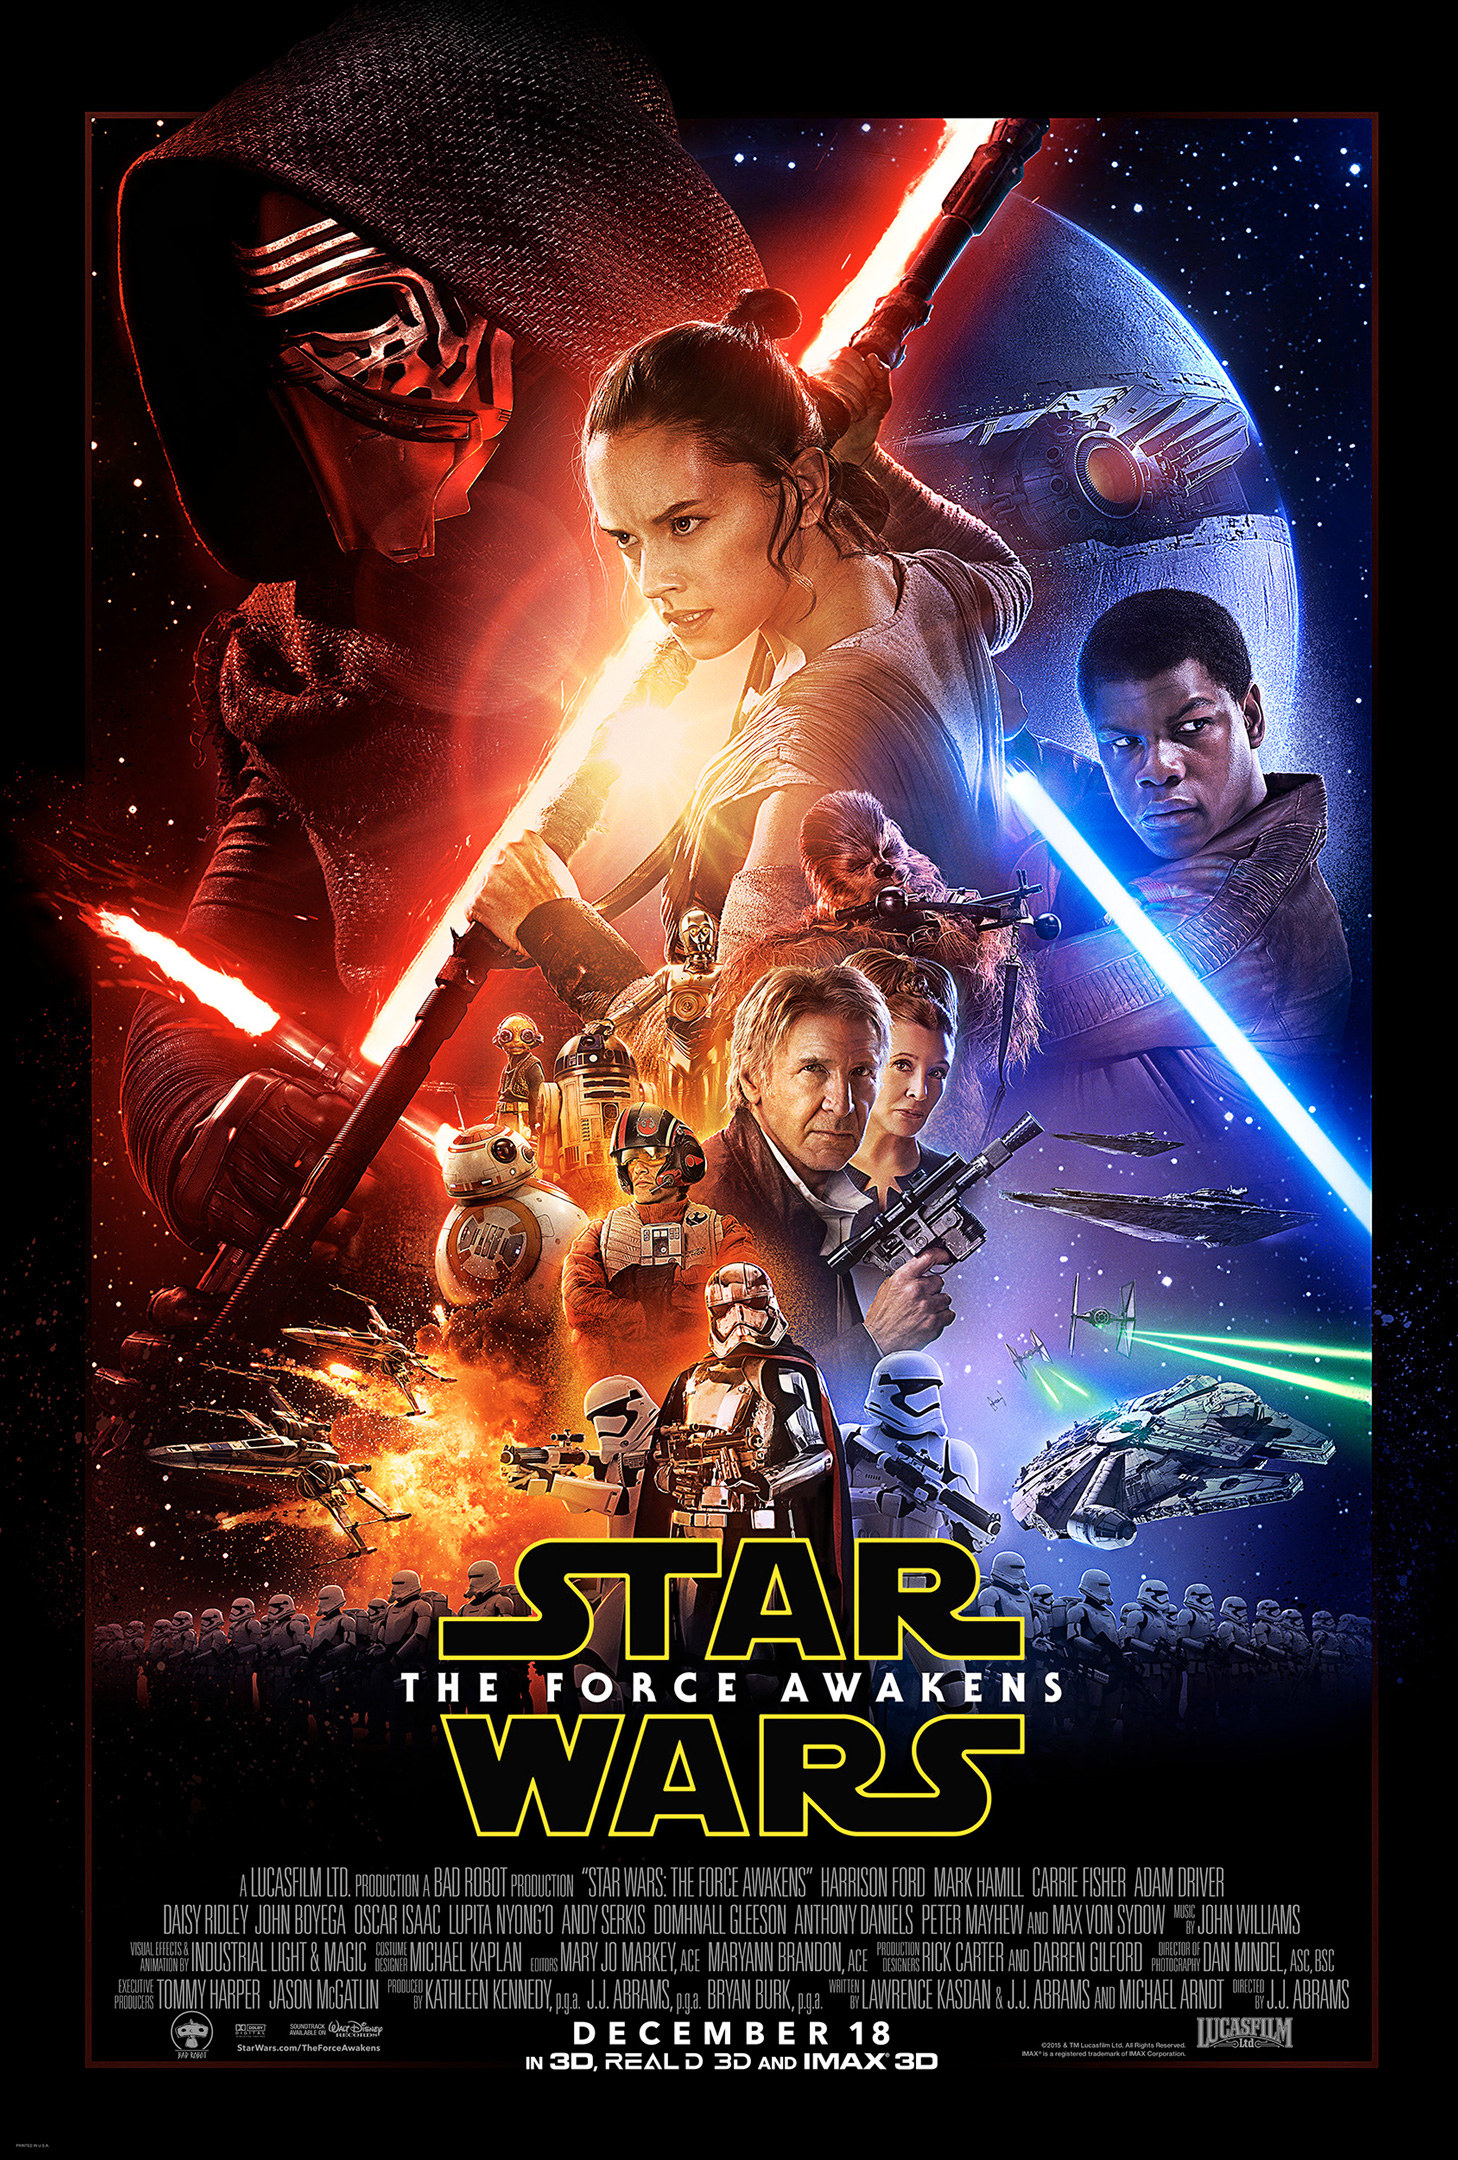 Star Wars Episode VII: The Force Awakens #3